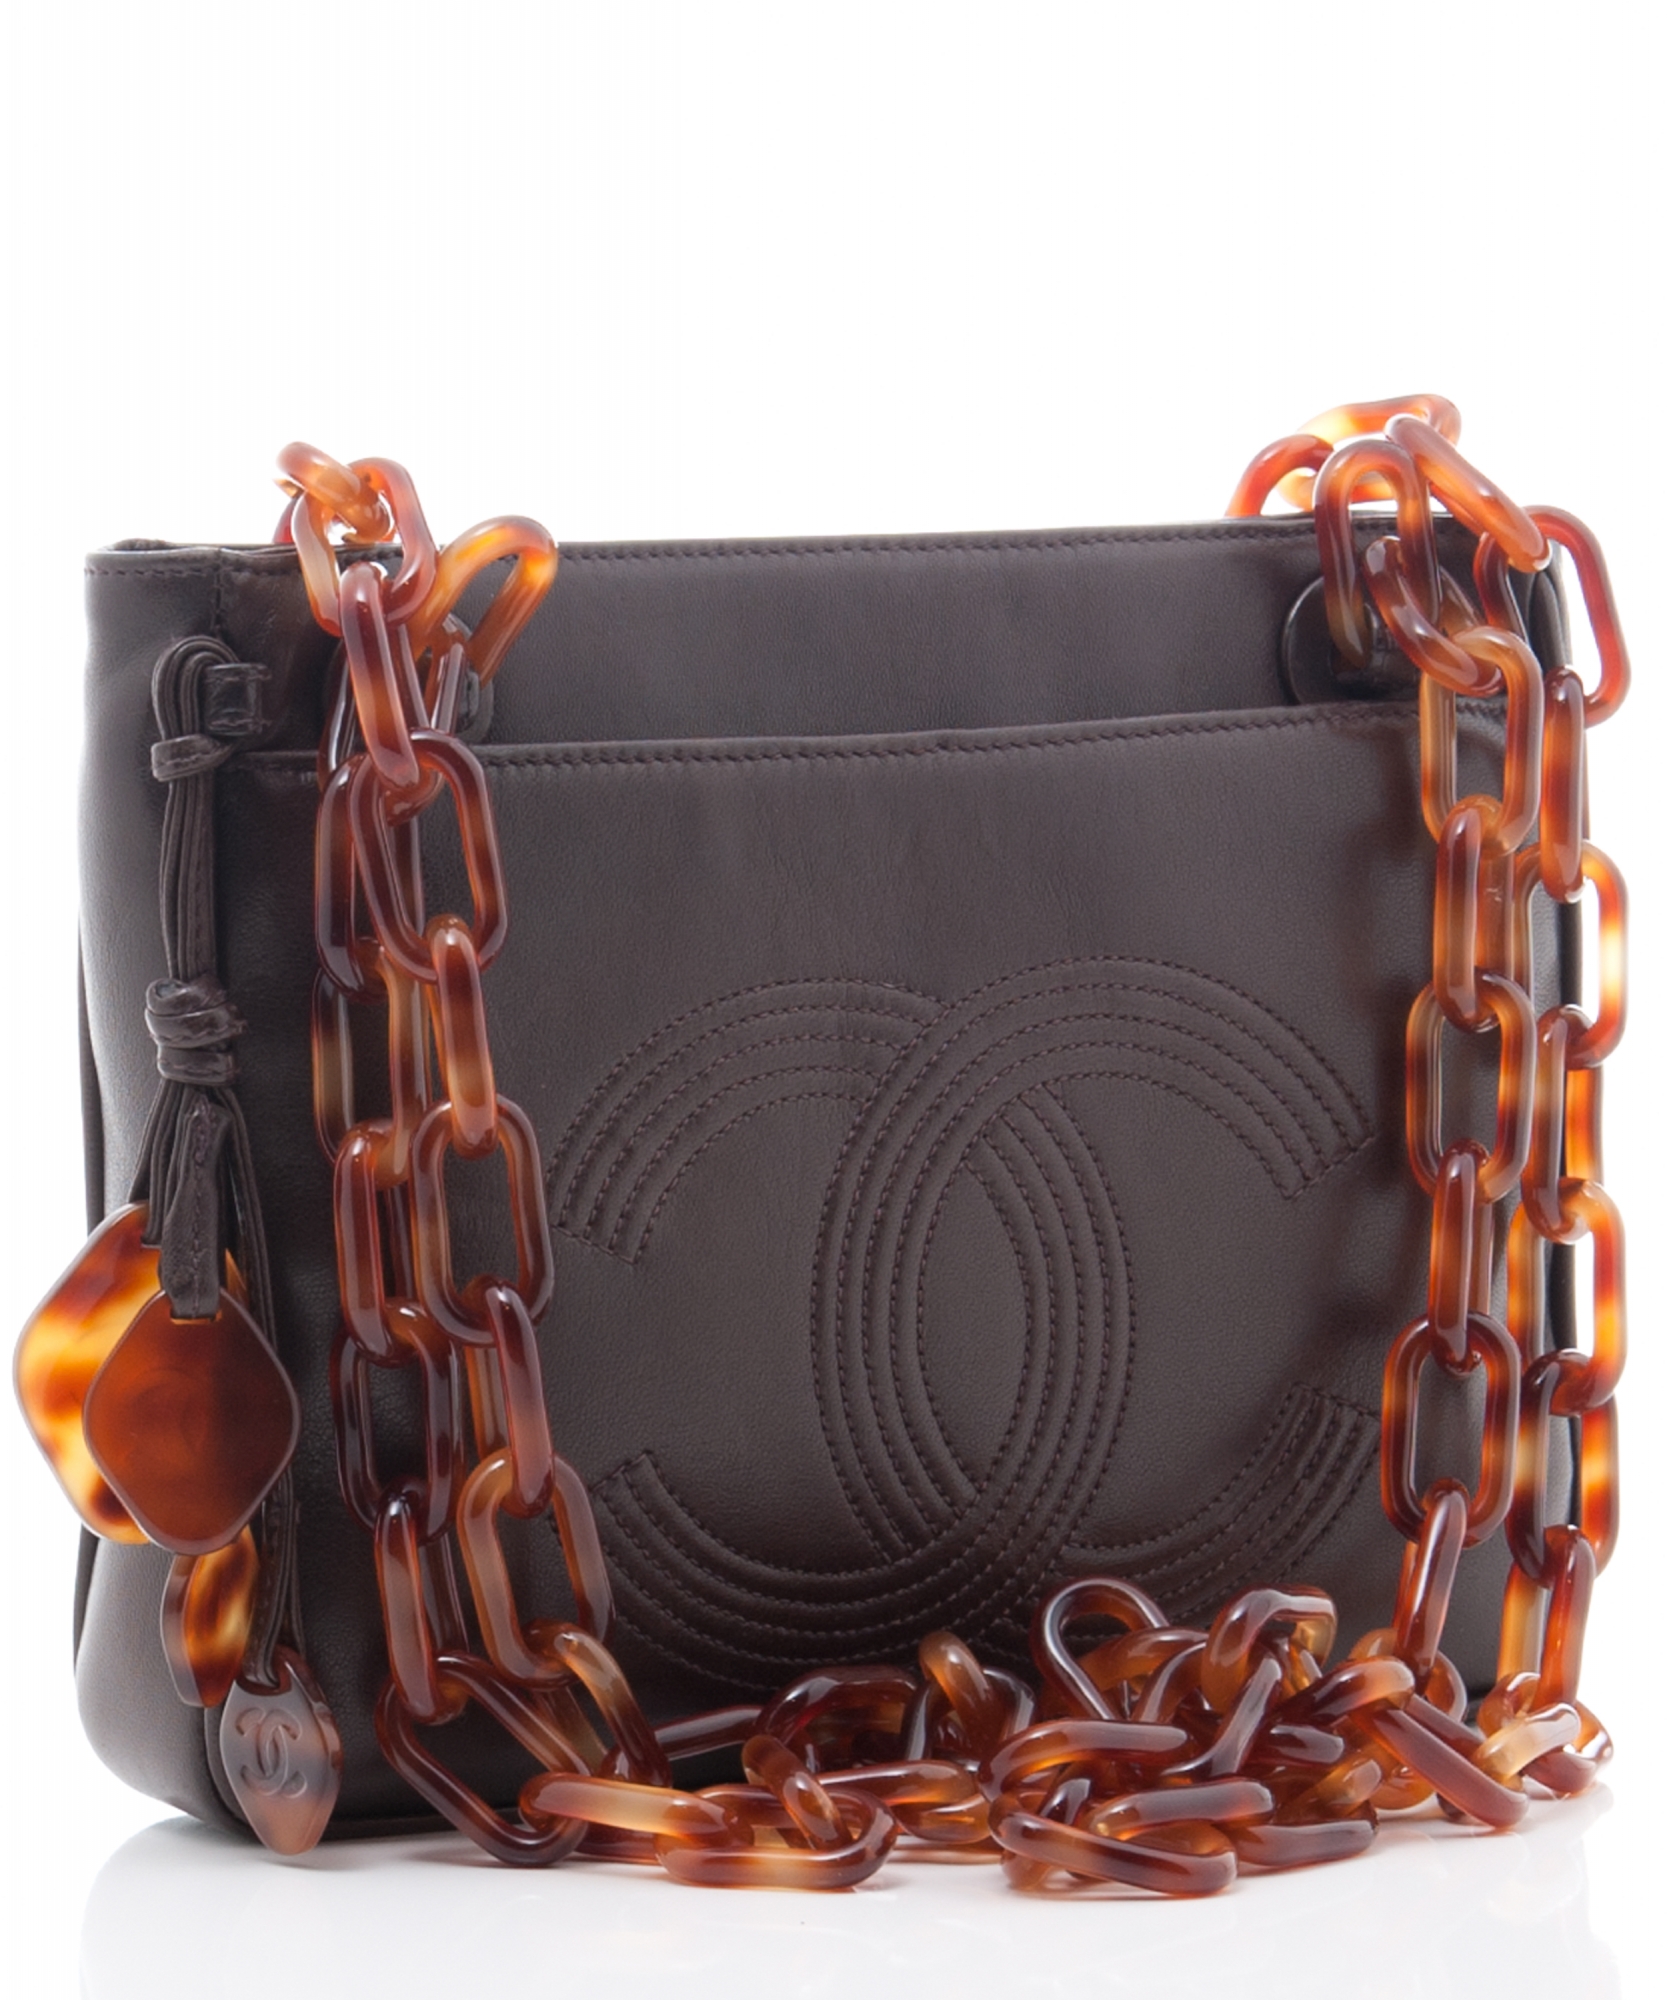 Chanel Brown Leather Tortoise Chain Shoulder Bag - Chanel | La Doyenne